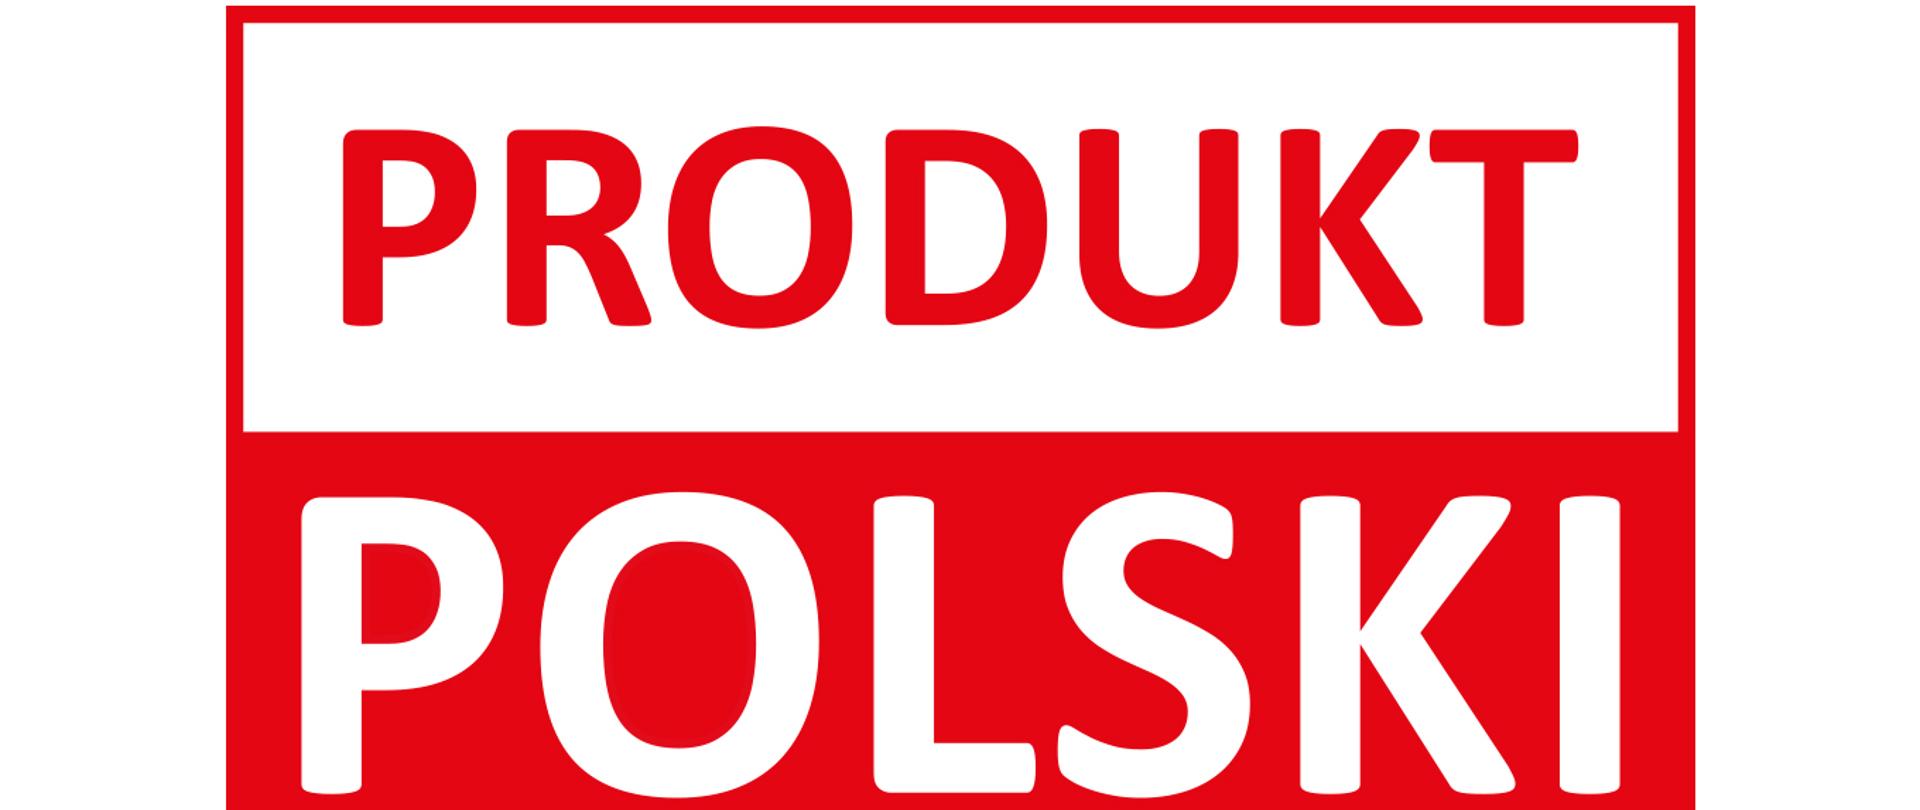 Produkt Polski